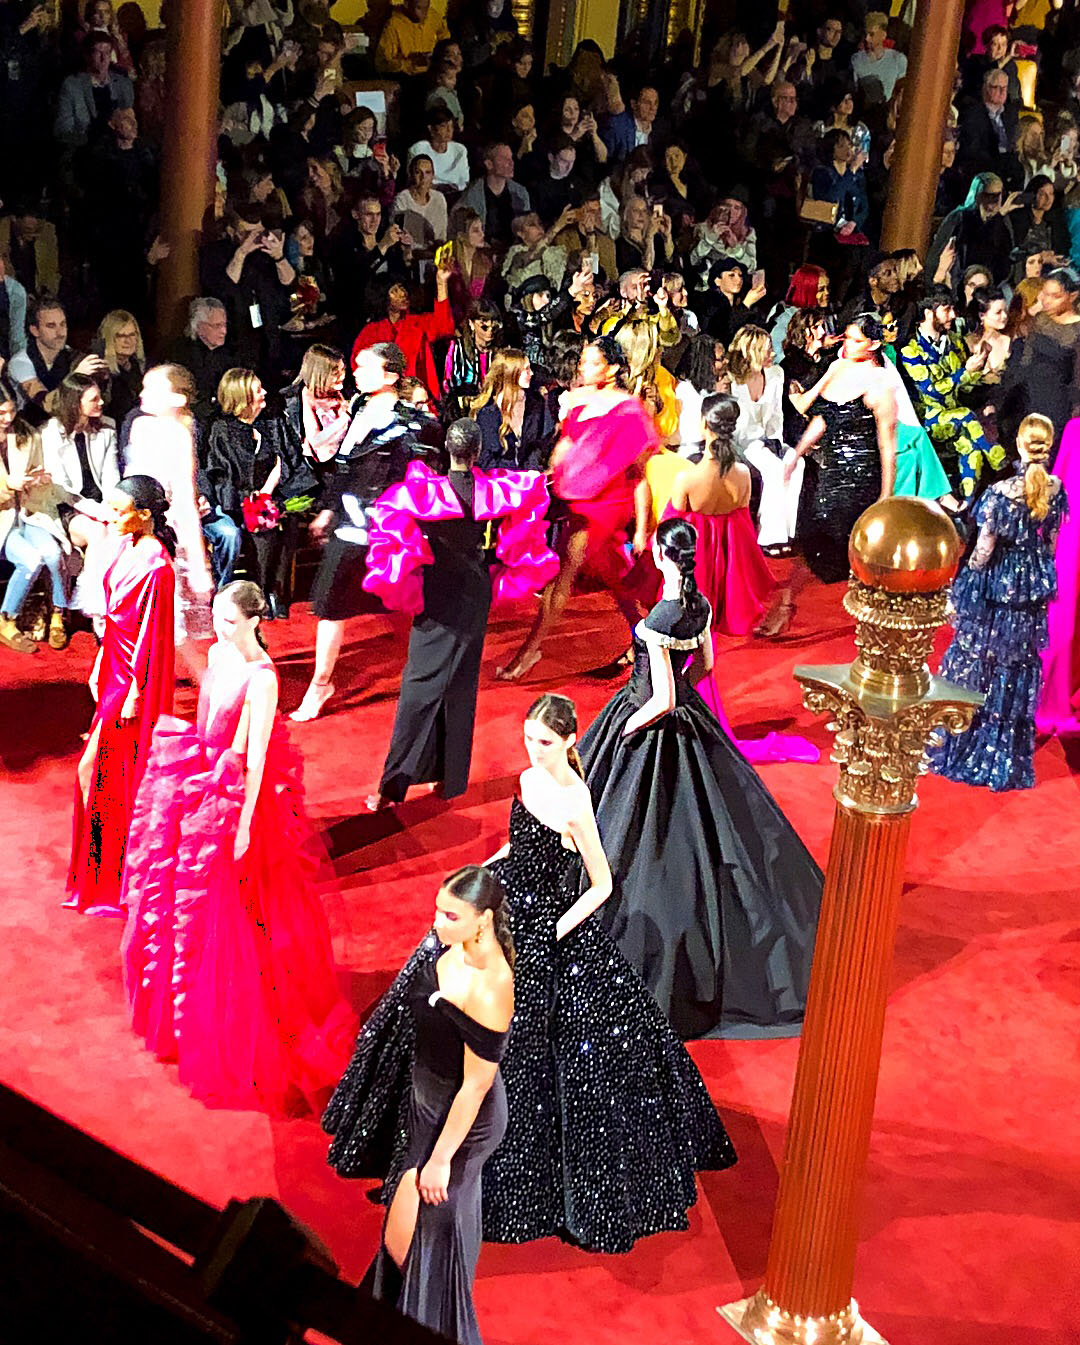 Christian Siriano New York Fashion Week Belle Meets World